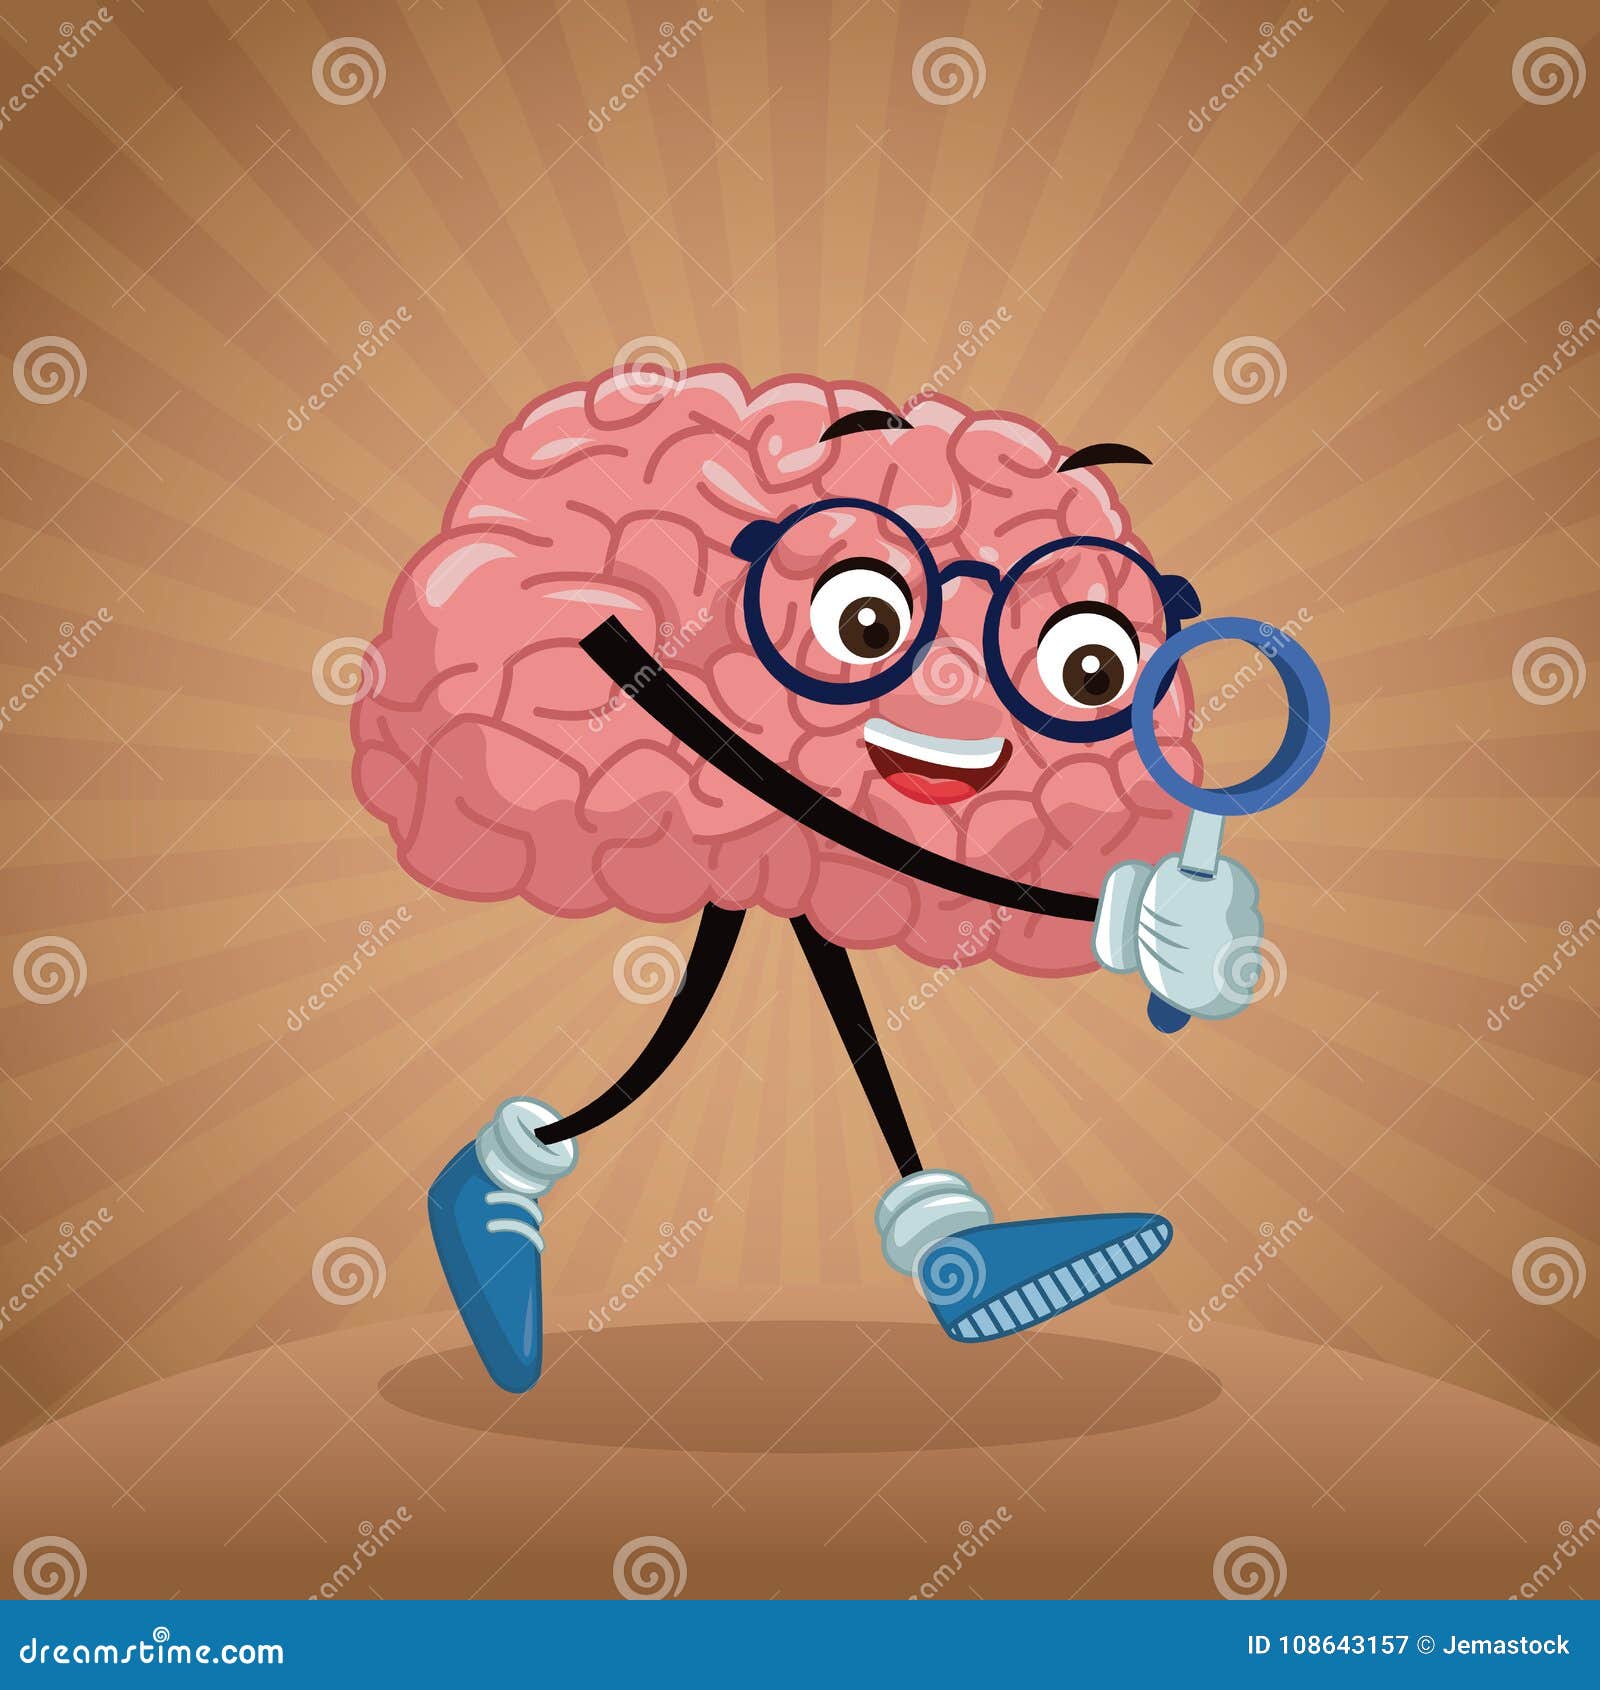 cute-brain-cartoon-cute-brain-cartoon-icon-vector-illustration-graphic-design-108643157.jpg